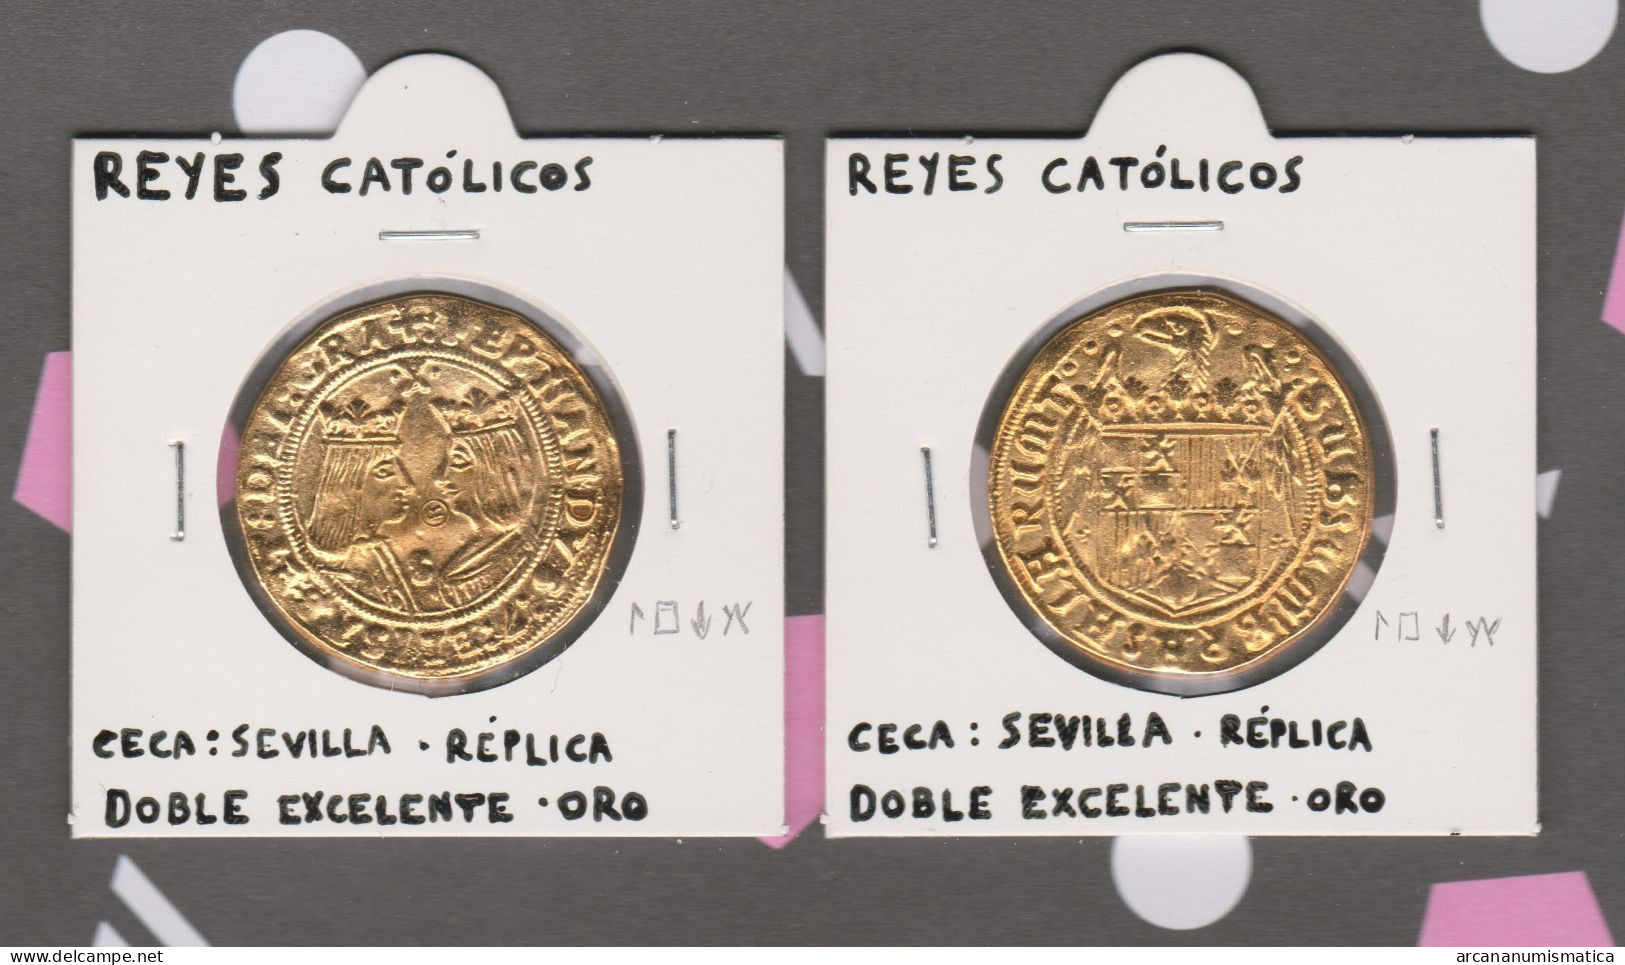 REYES CATOLICOS  DOBLE EXCELENTE - ORO CECA: SEVILLA  Réplica   T-DL-13.434 - Fausses Monnaies